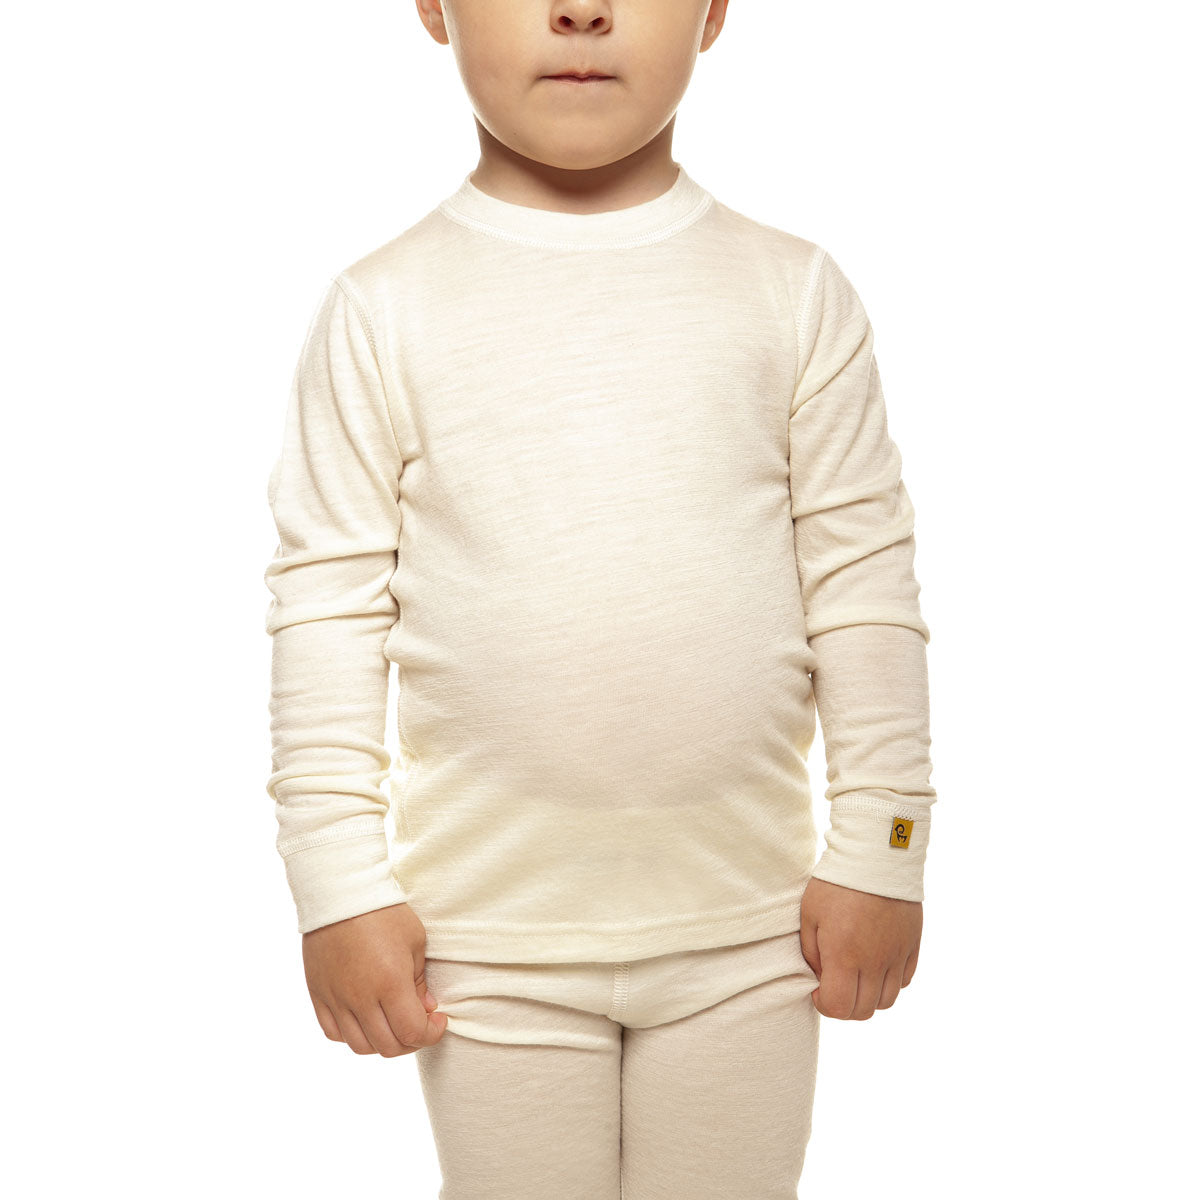 MENIQUE Long Sleeve Crew 100% Merino Wool Kids Shirt Natural